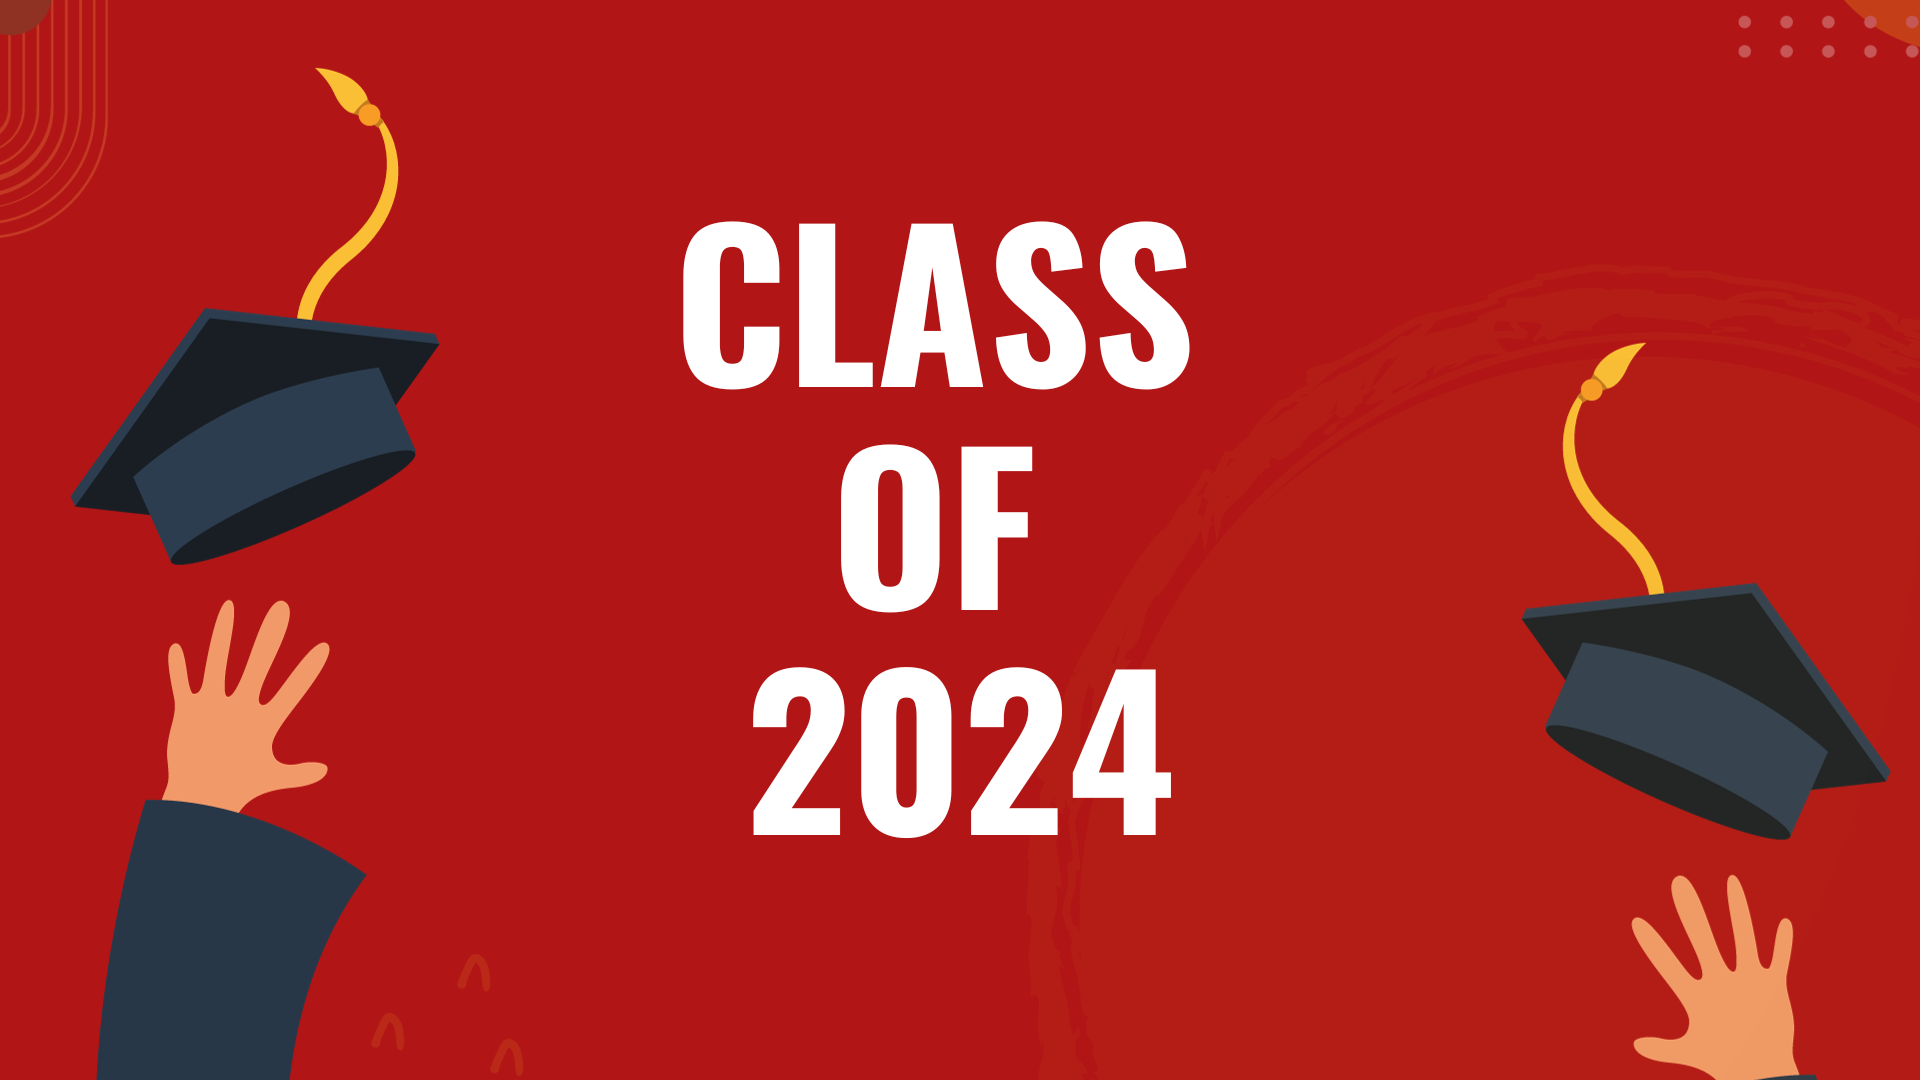 Graduation 2024